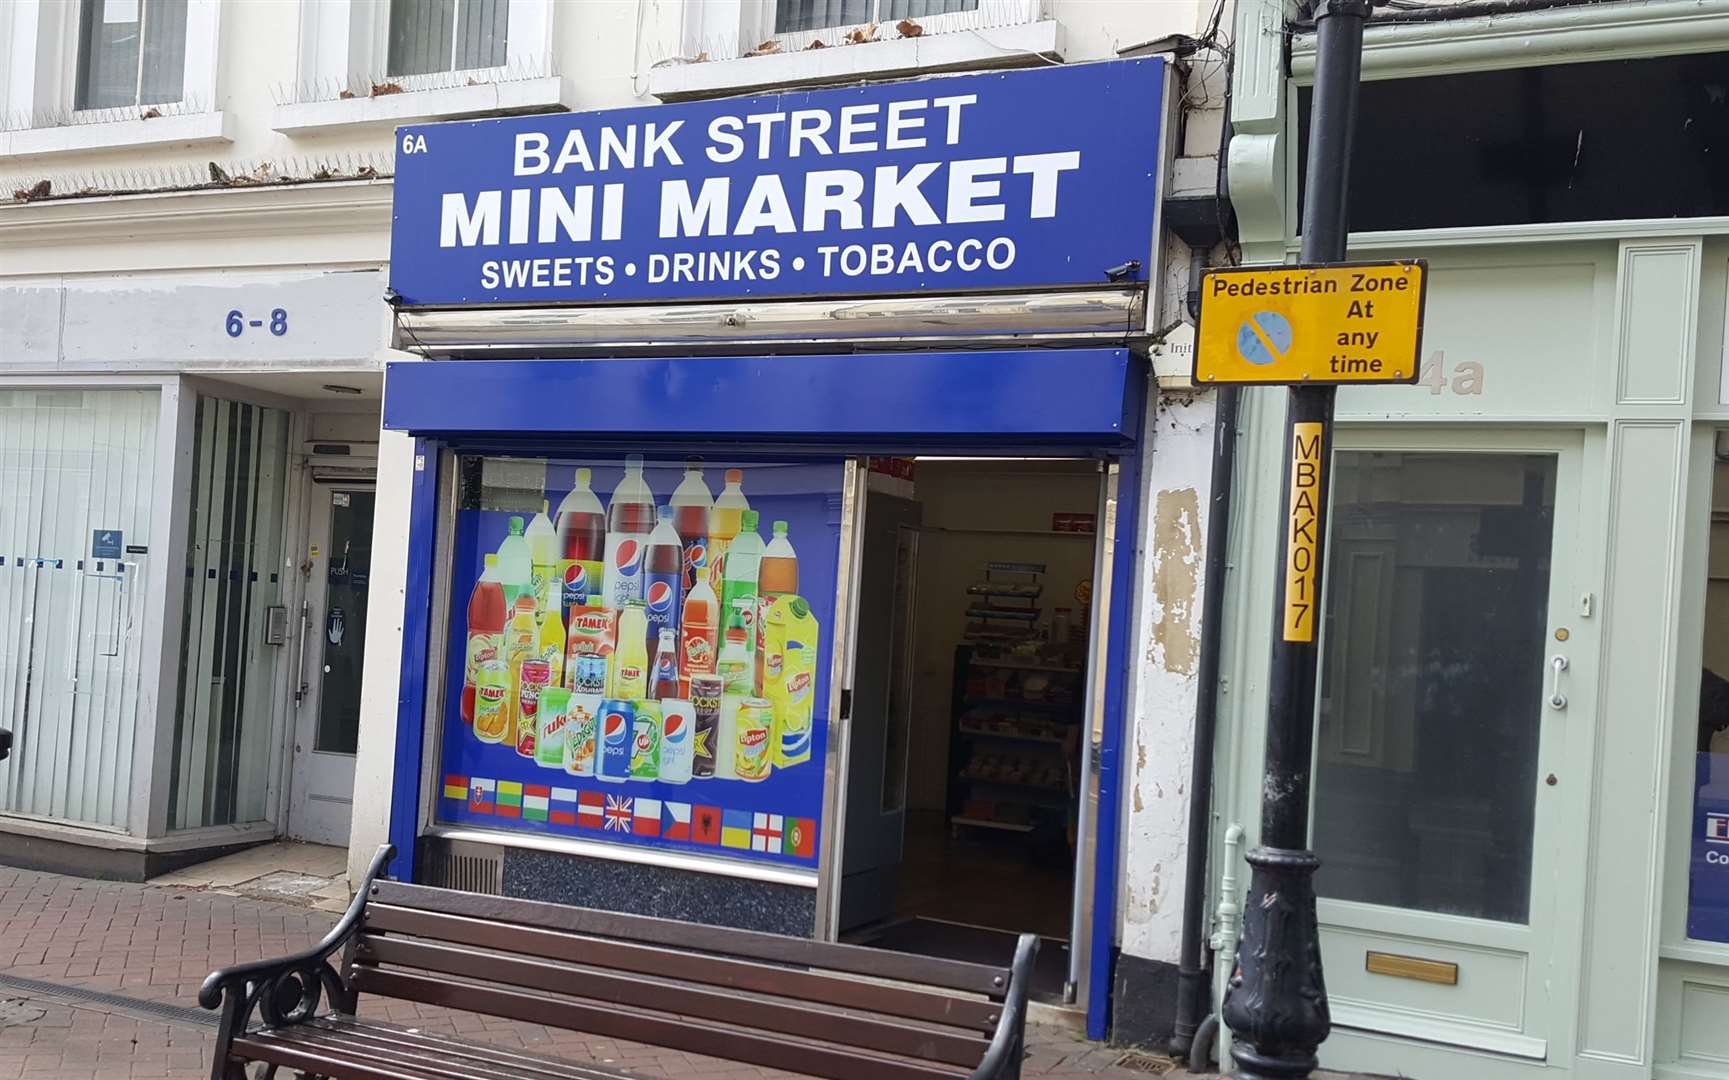 The Bank Street Mini Market in Ashford town centre